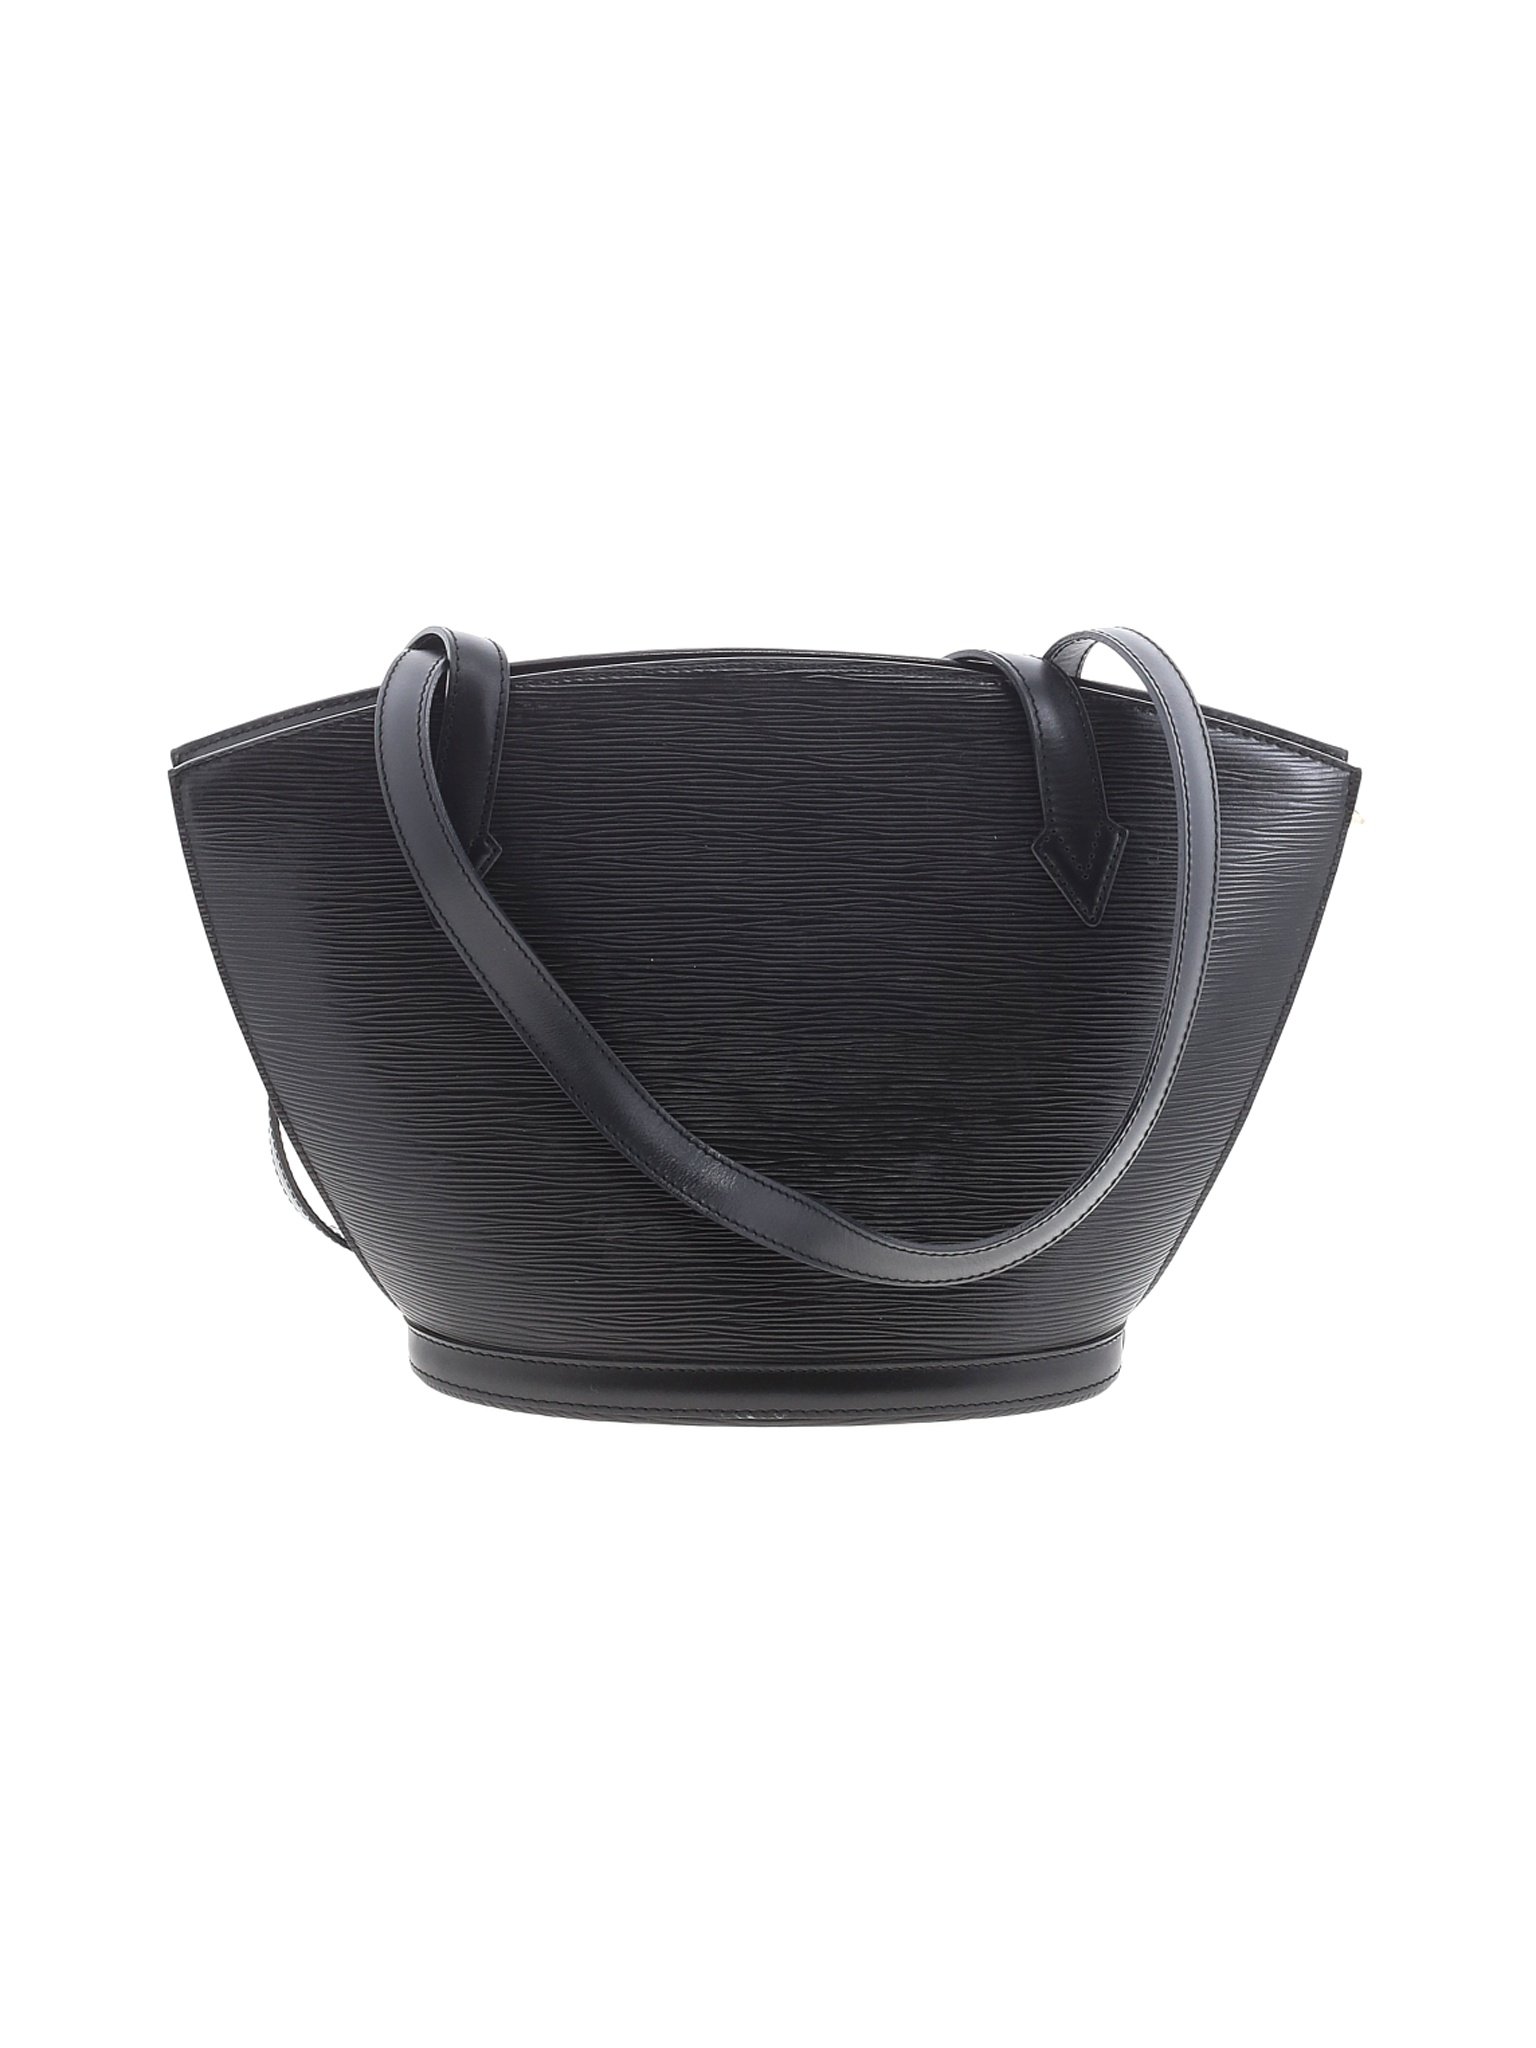 Louis Vuitton Women Black Leather Shoulder Bag One Size | eBay